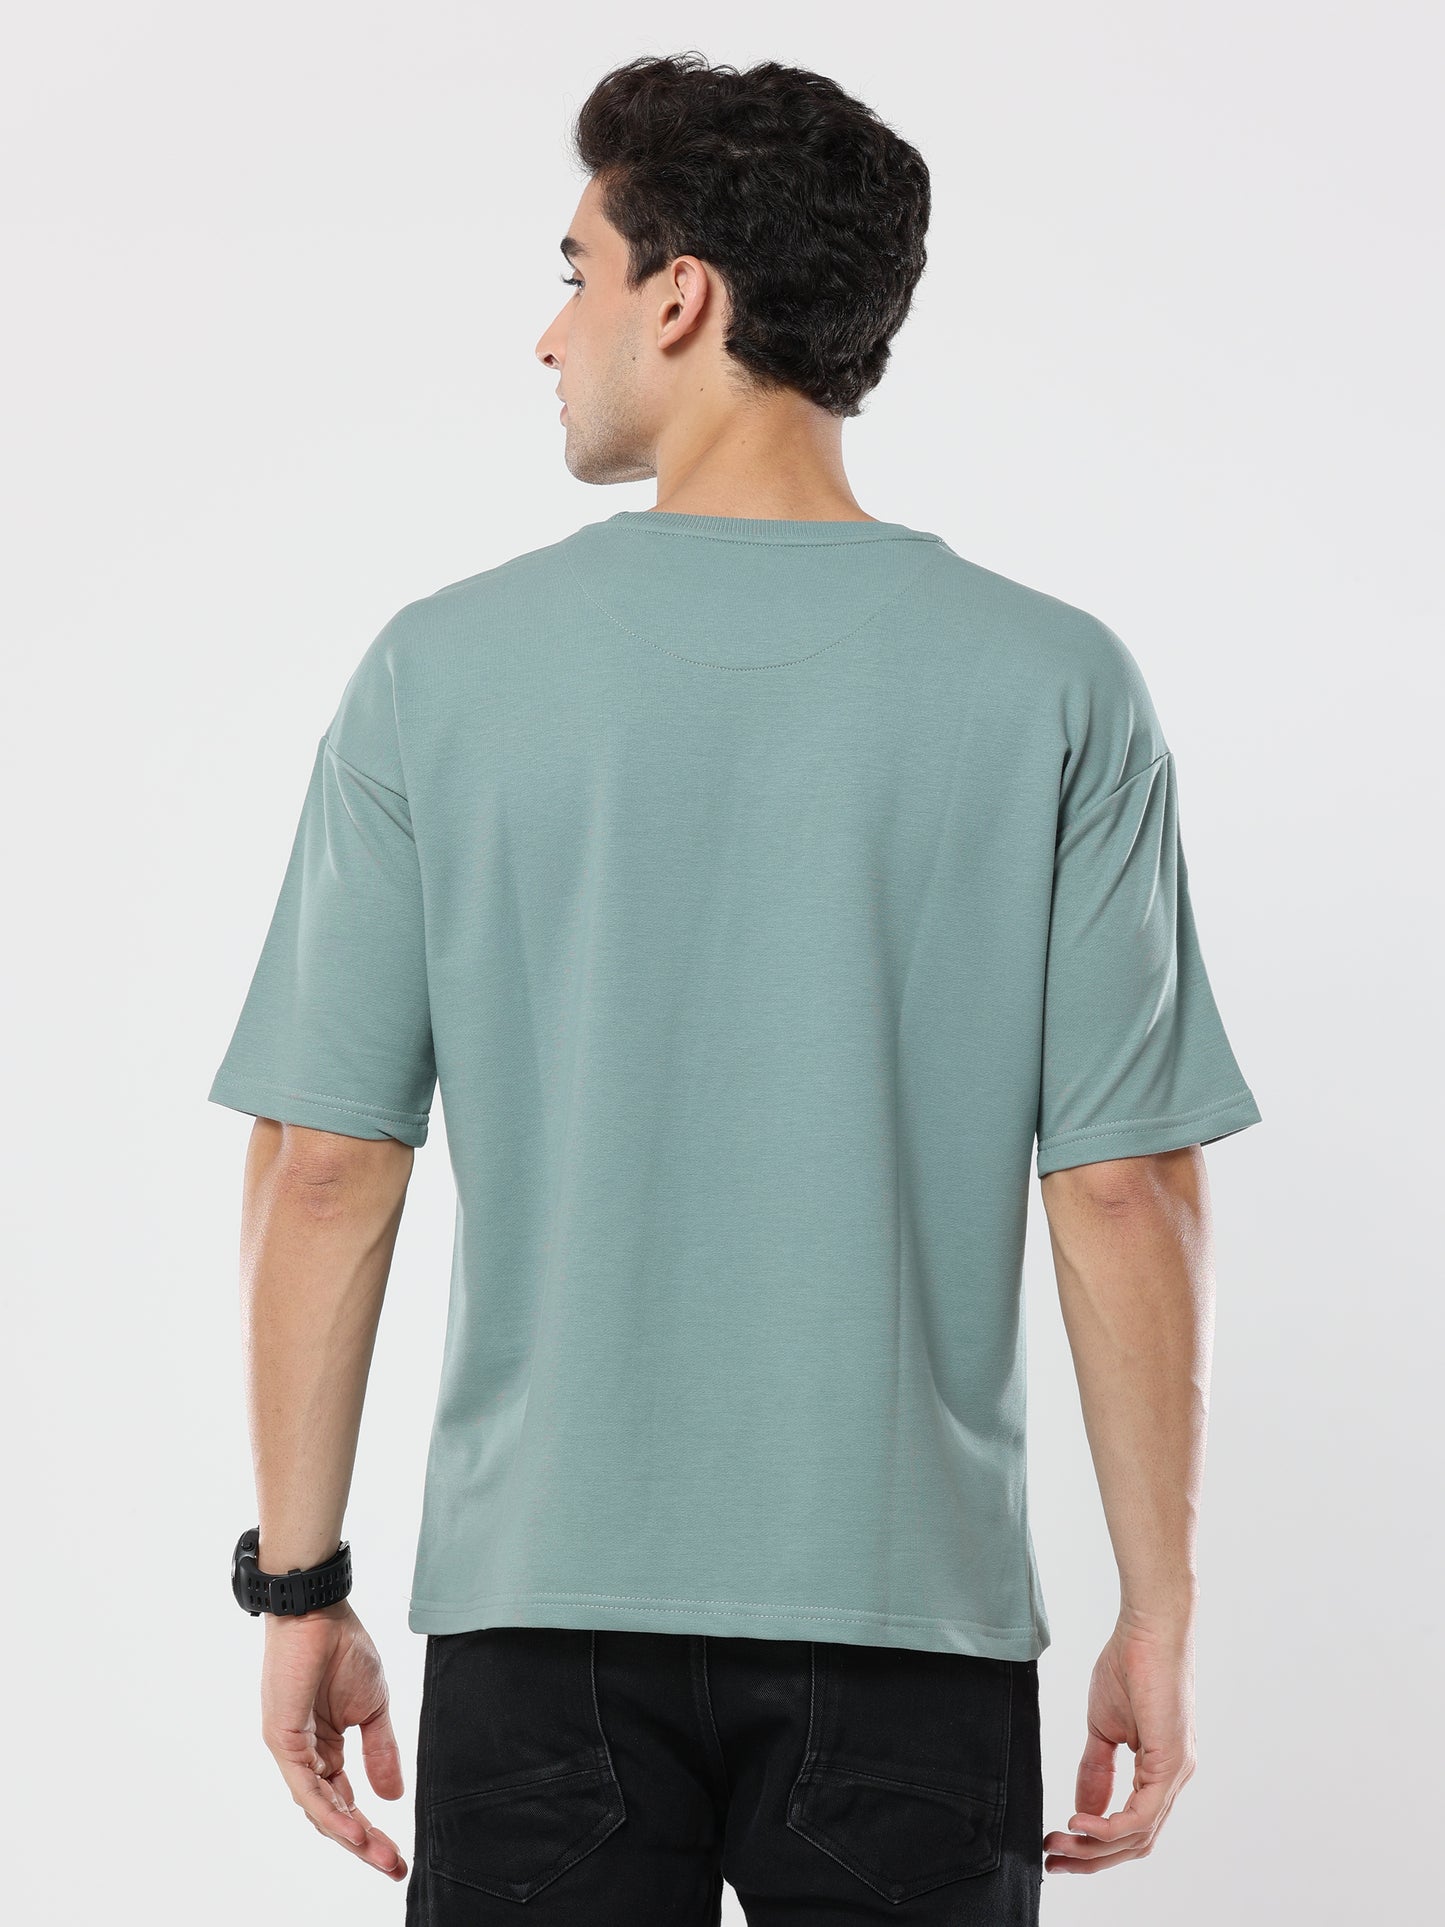 Sea Green Trouble Maker Print very premium Quality Oversized T-Shirt